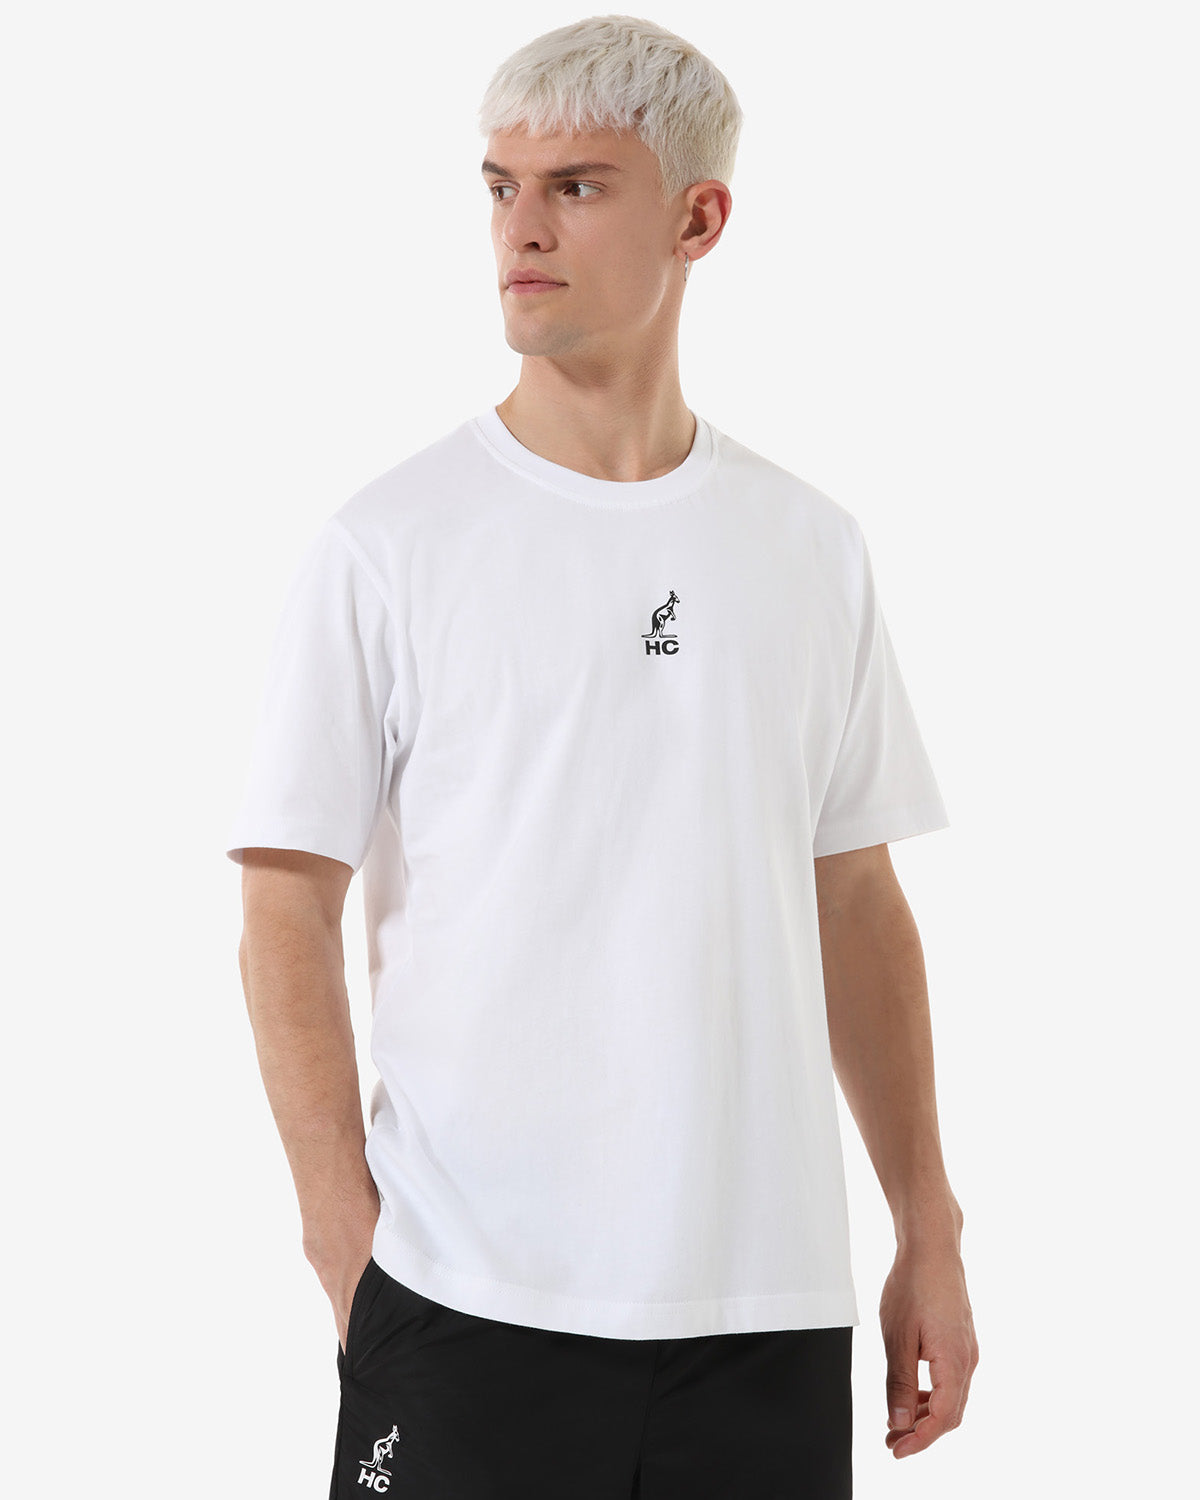 Orbit T-Shirt: Australian Hard Court